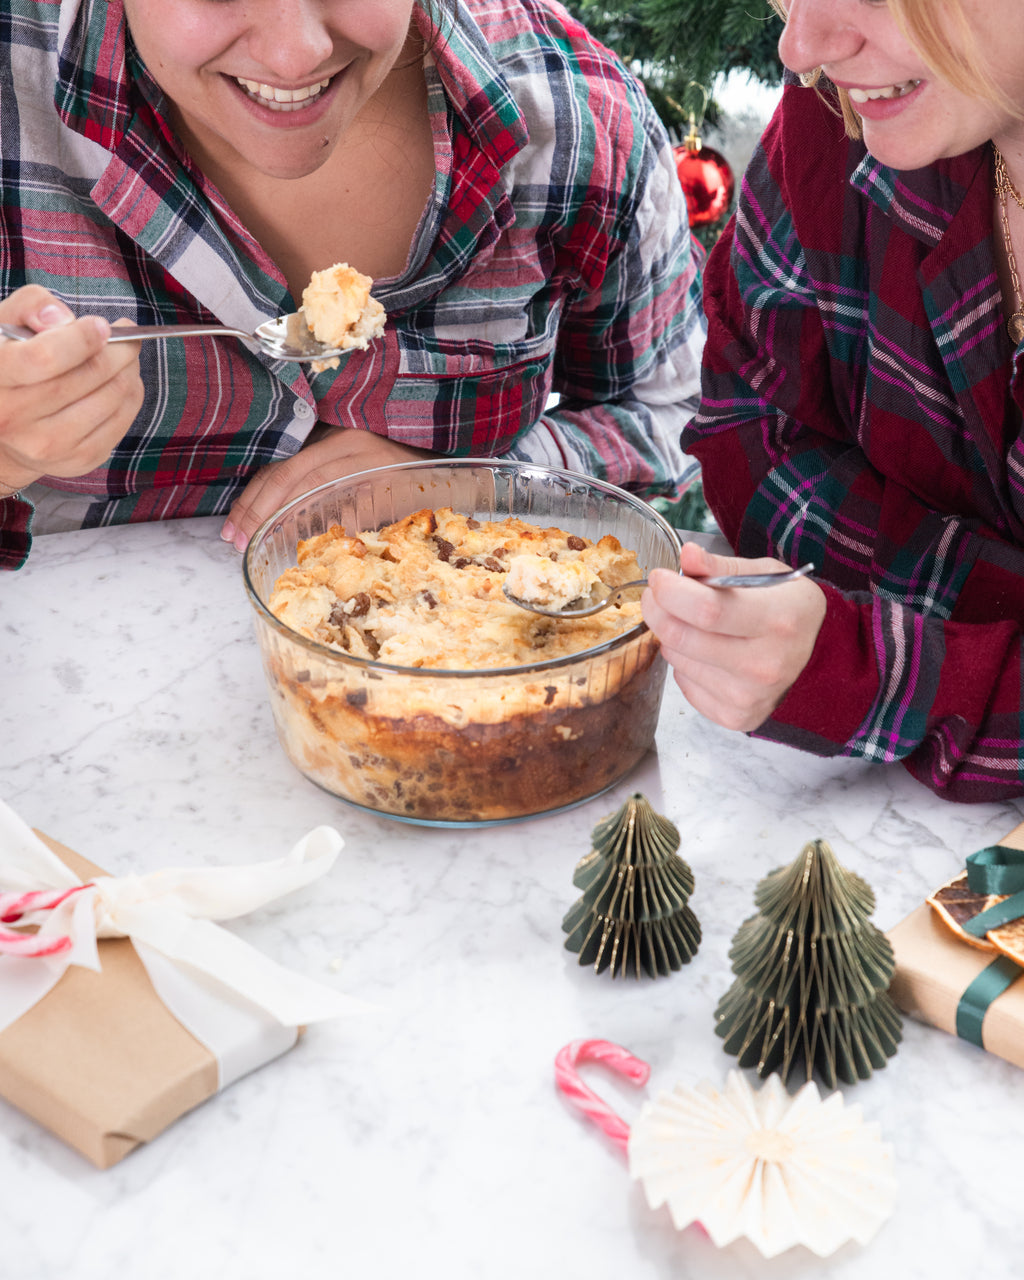 The tasty anti-waste Christmas pudding